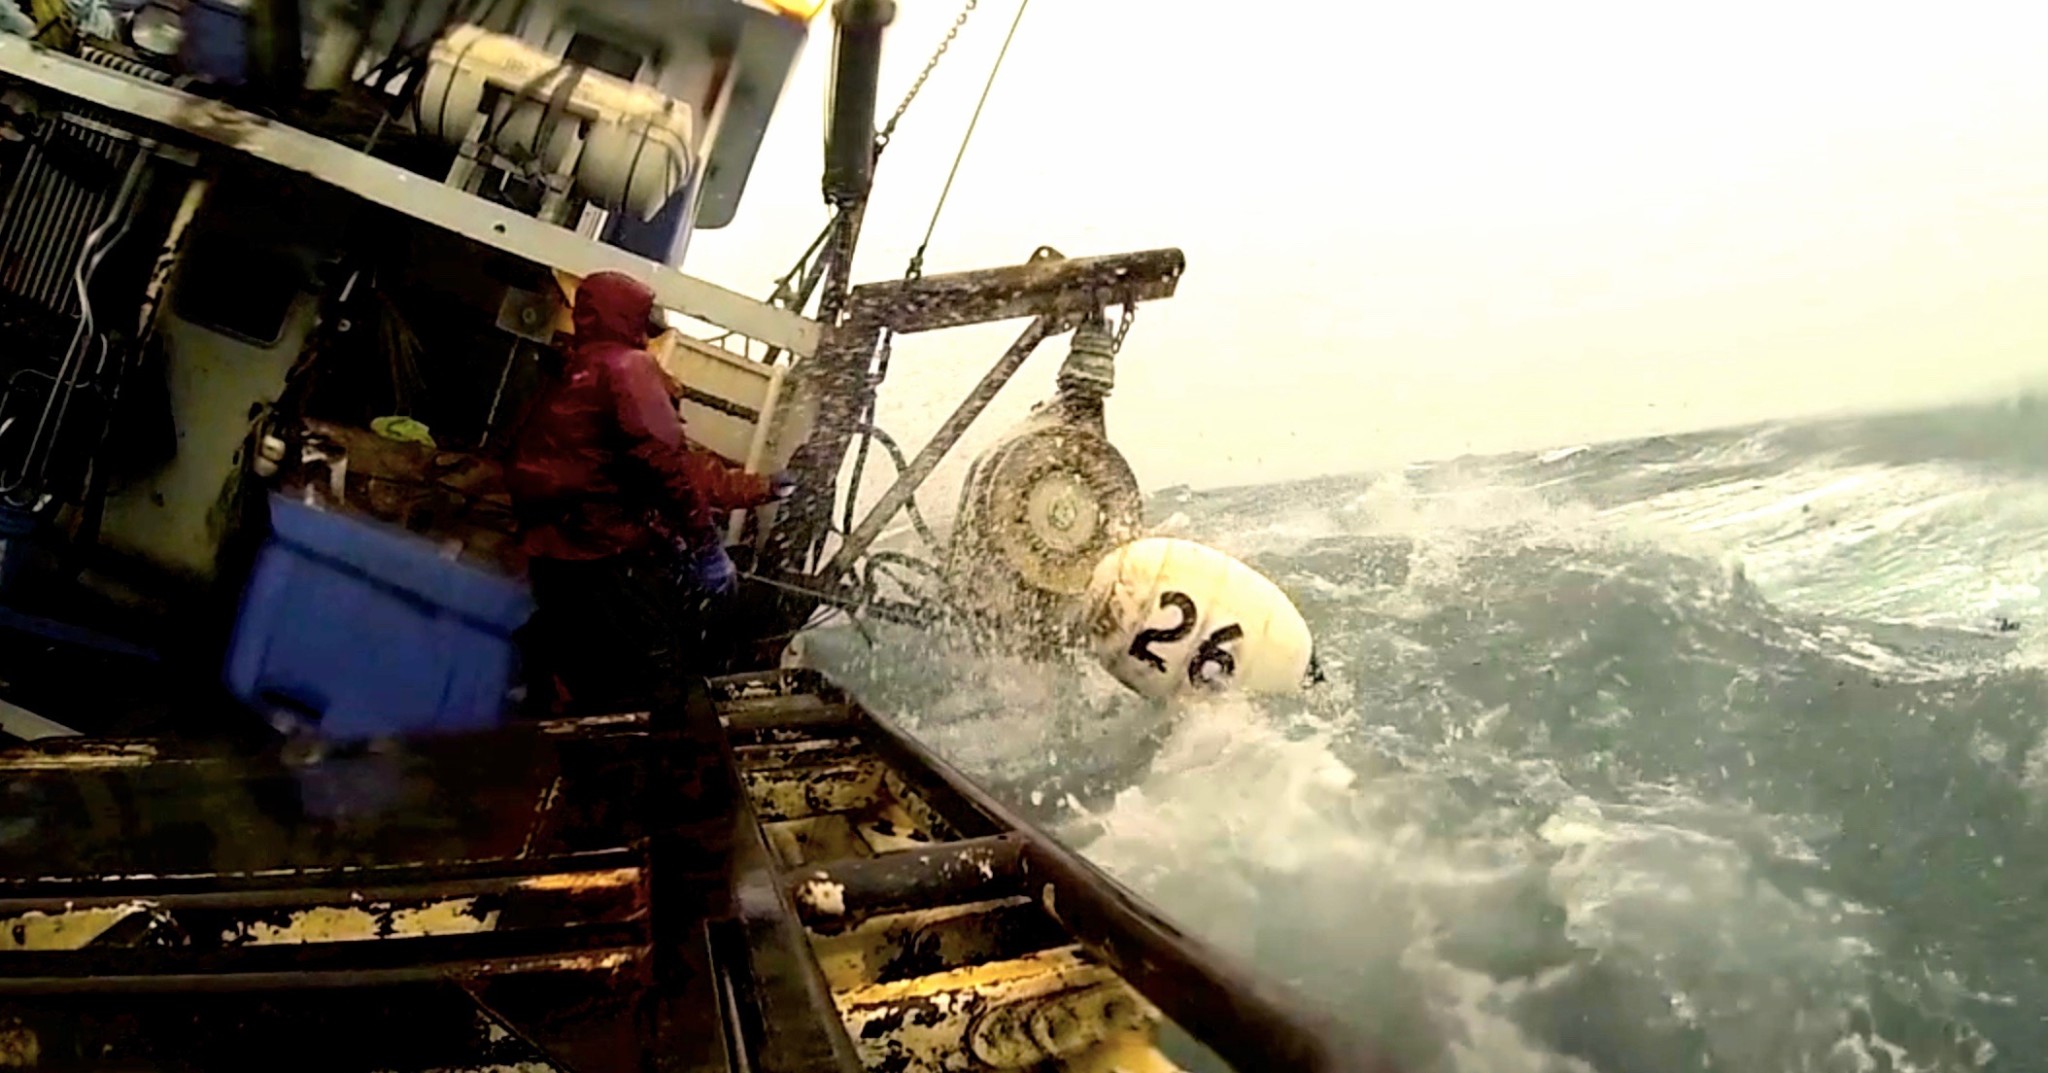 What happens on board fishing vessels?